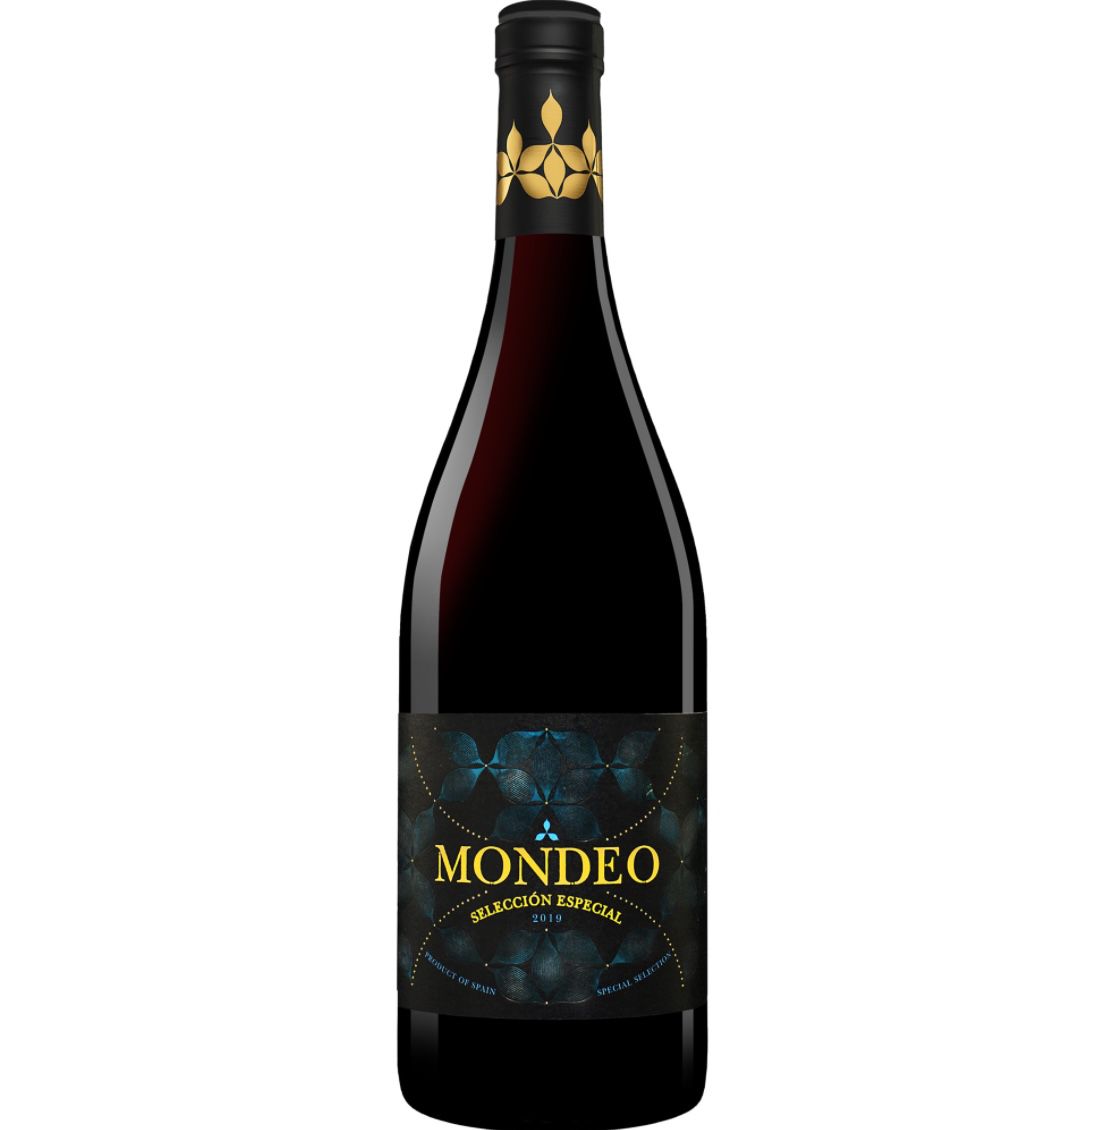 9 Flaschen Mondeo Selección Especial 2019 Rotwein für 58,49€   5,49€ pro Flasche